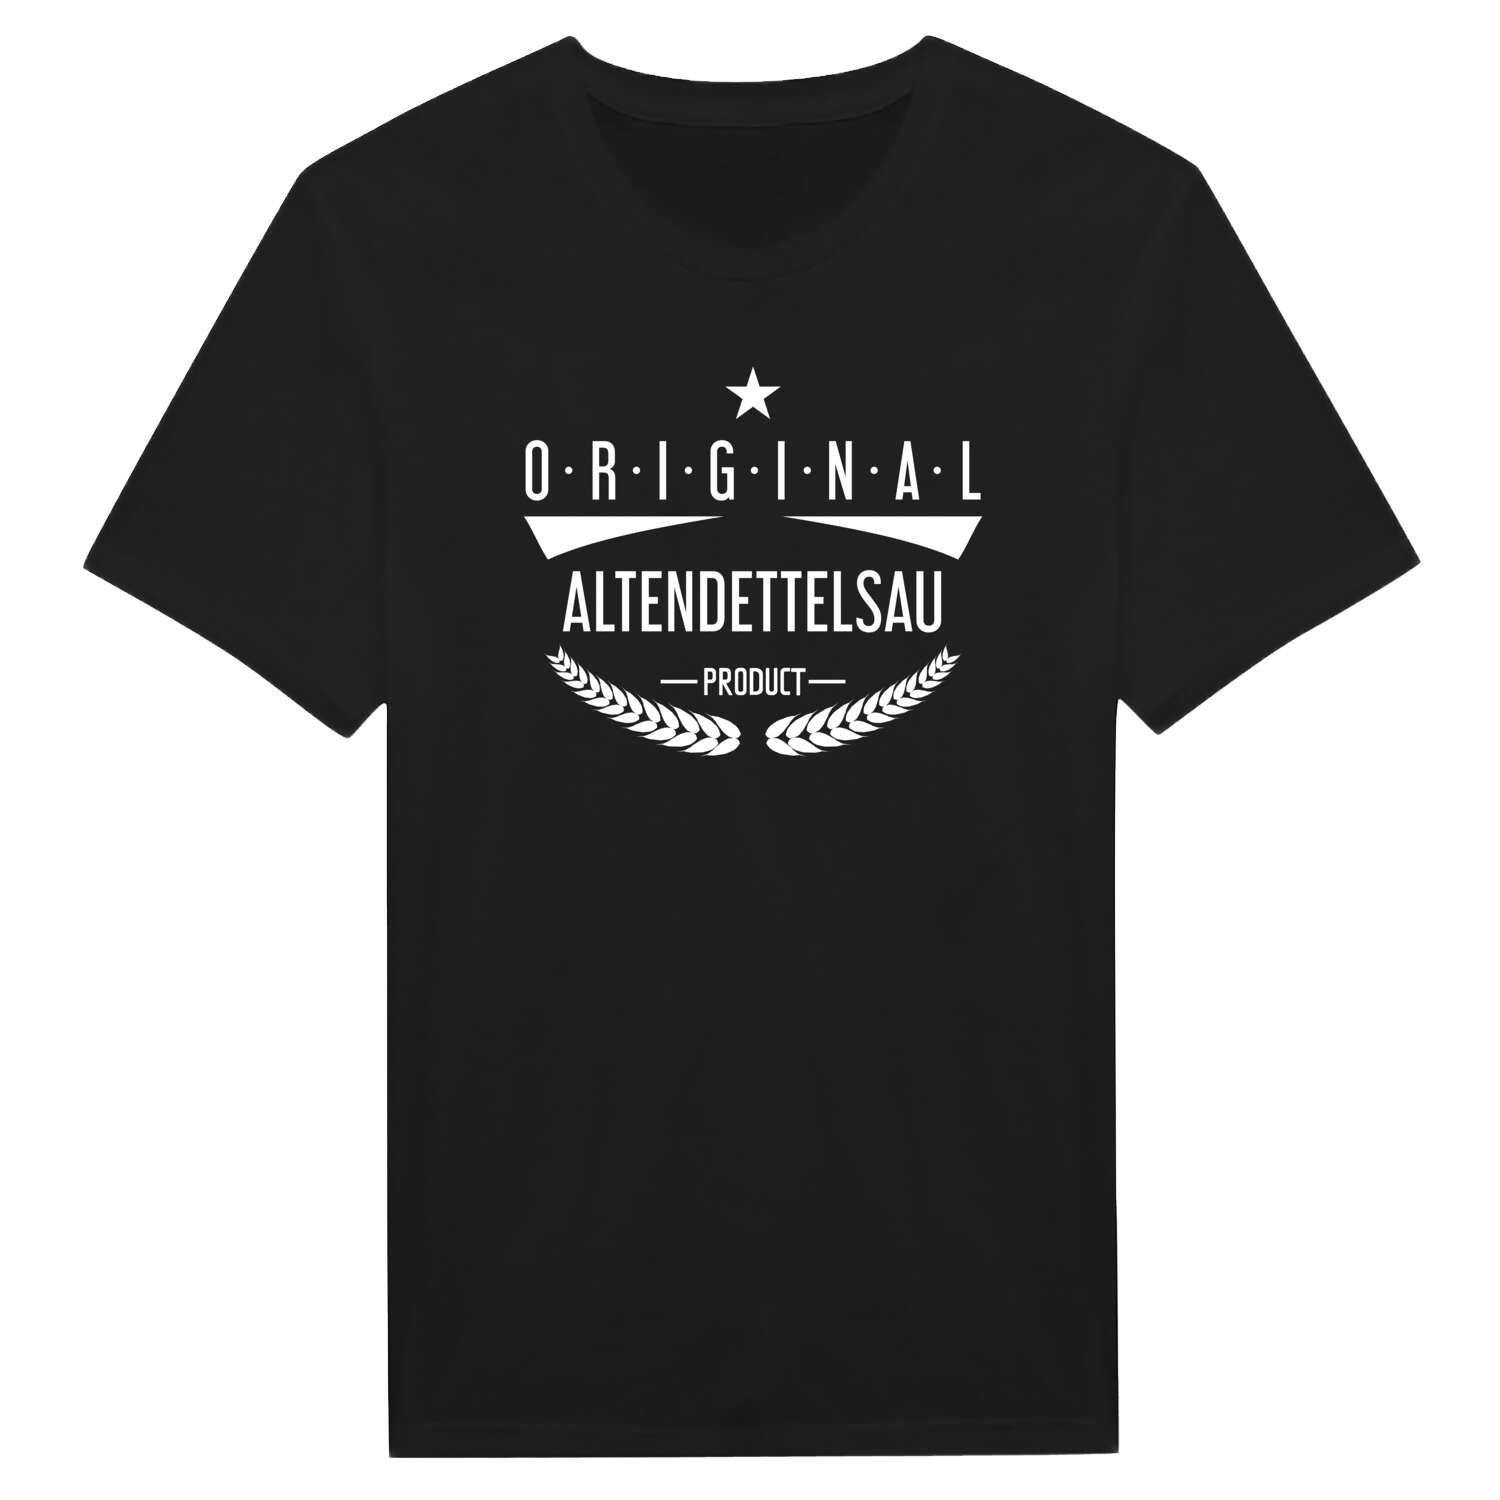 Altendettelsau T-Shirt »Original Product«